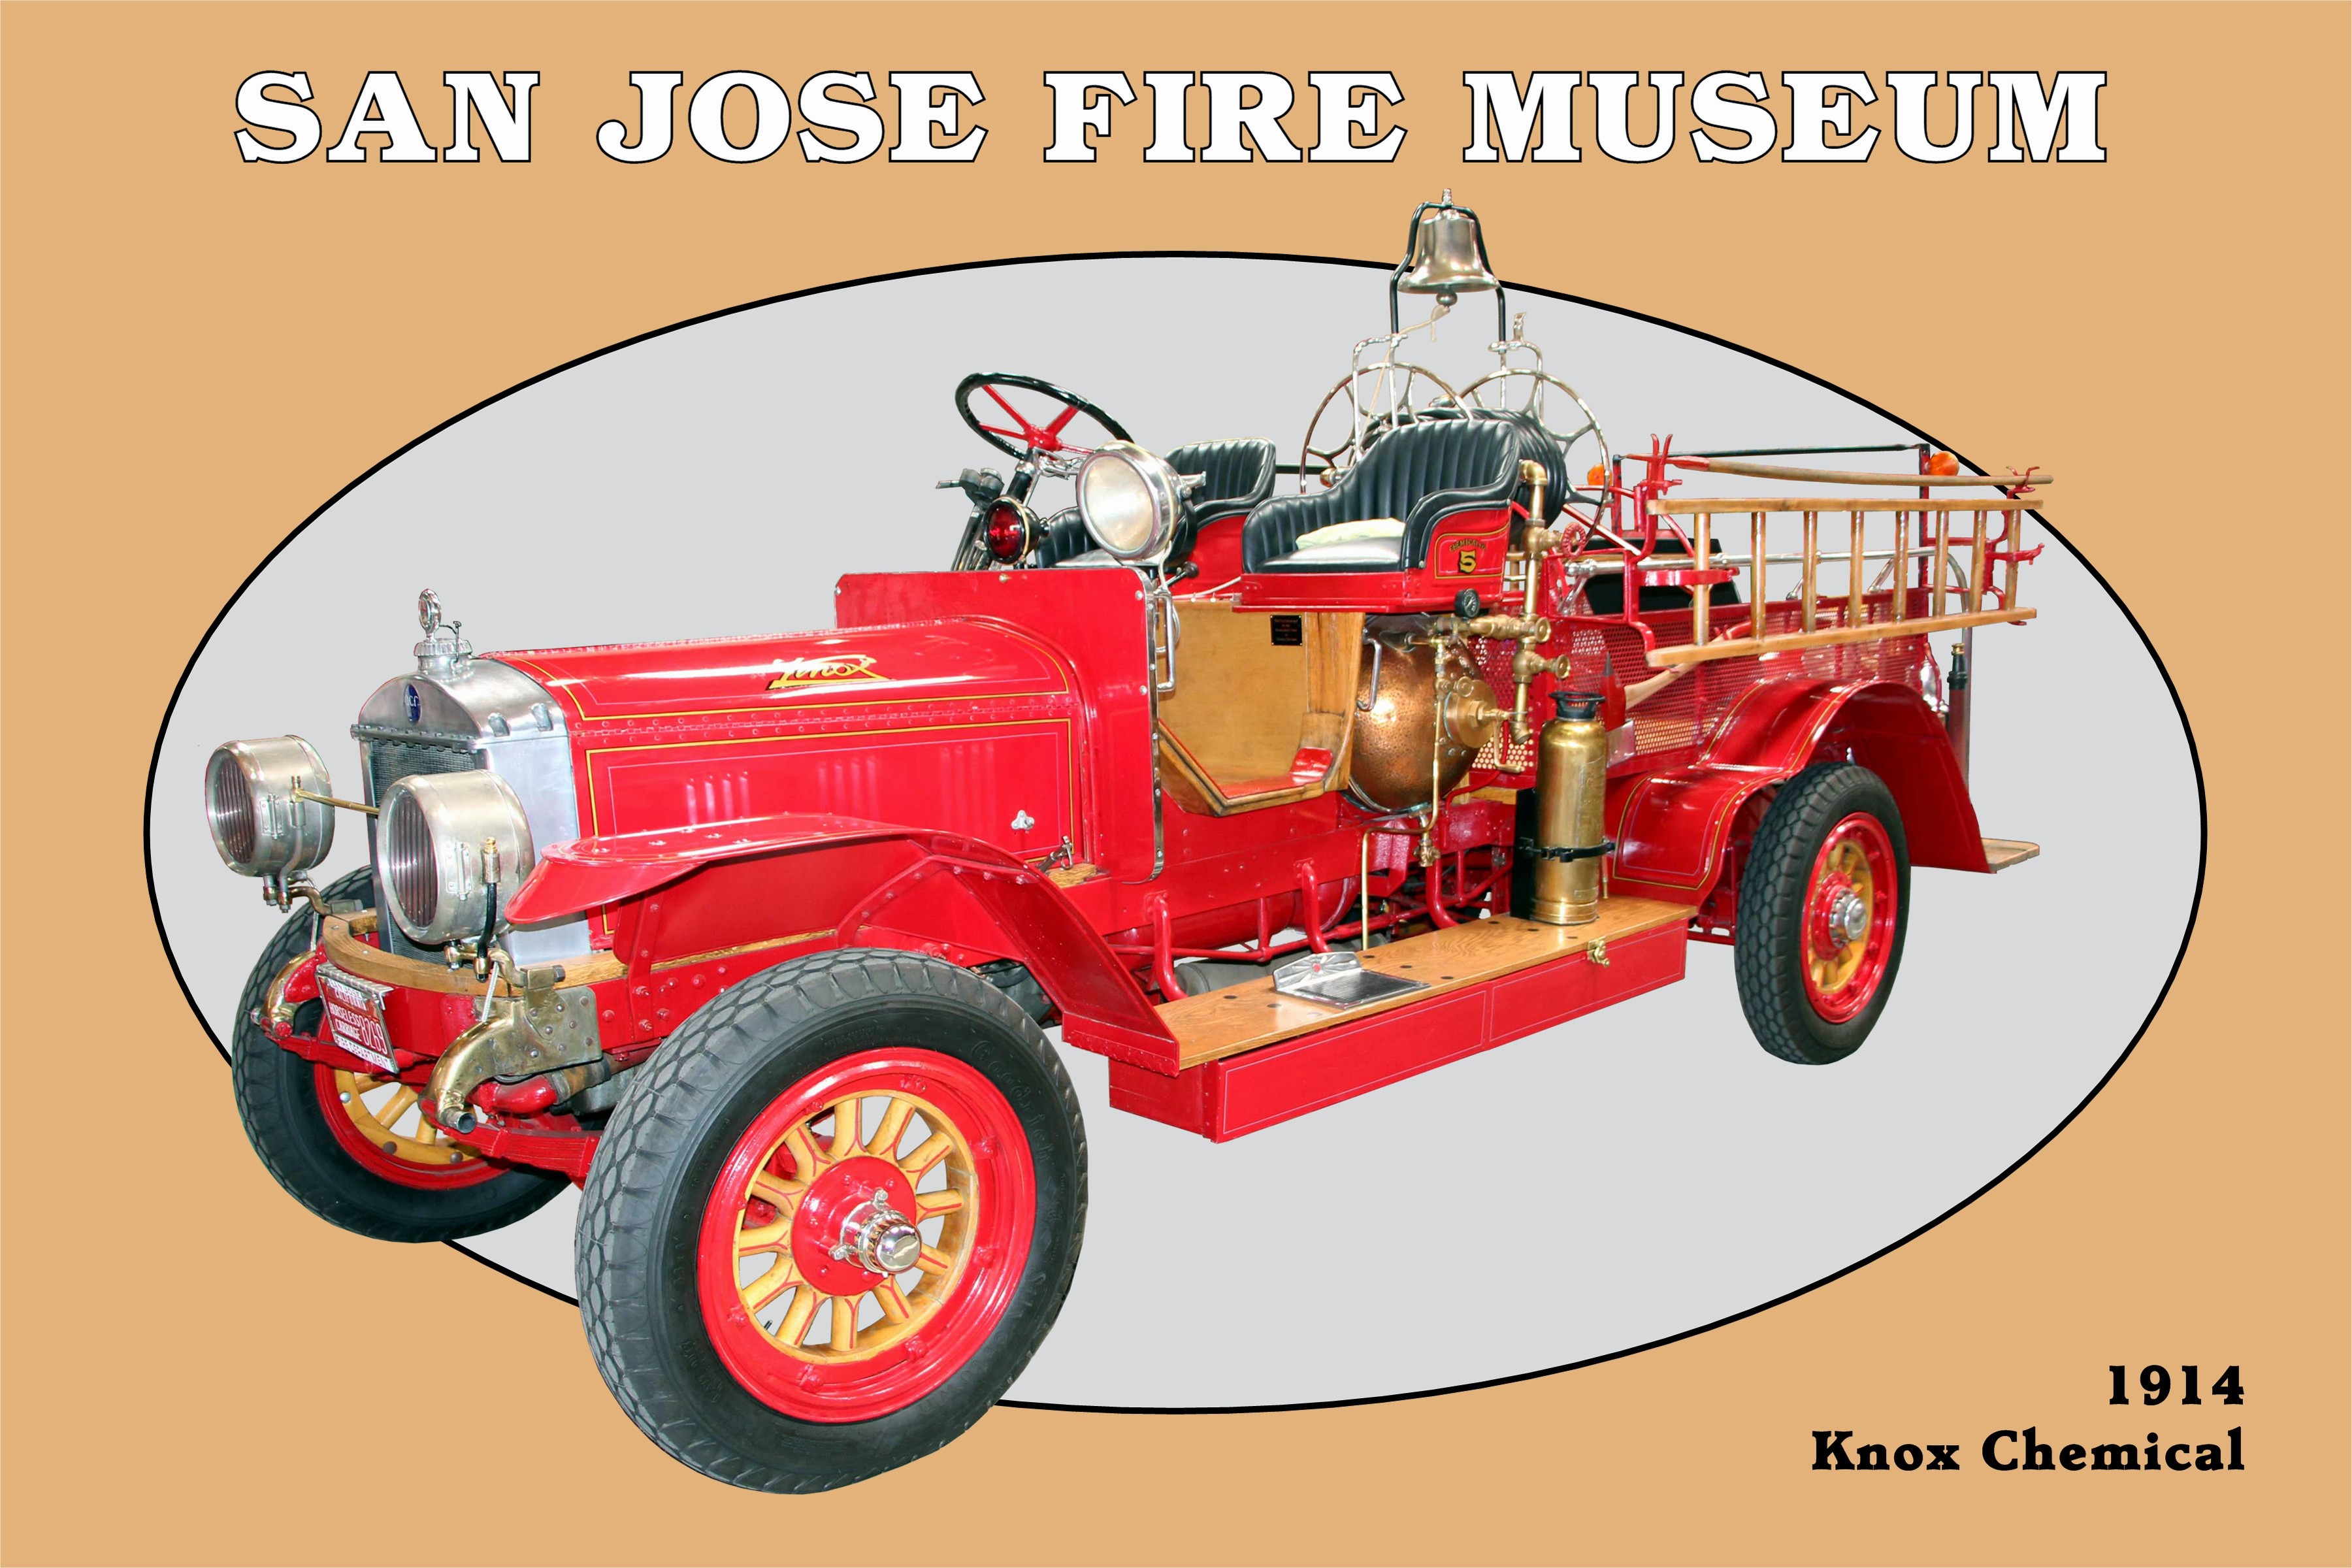 Apparatus | San Jose Fire Museum3600 x 2400